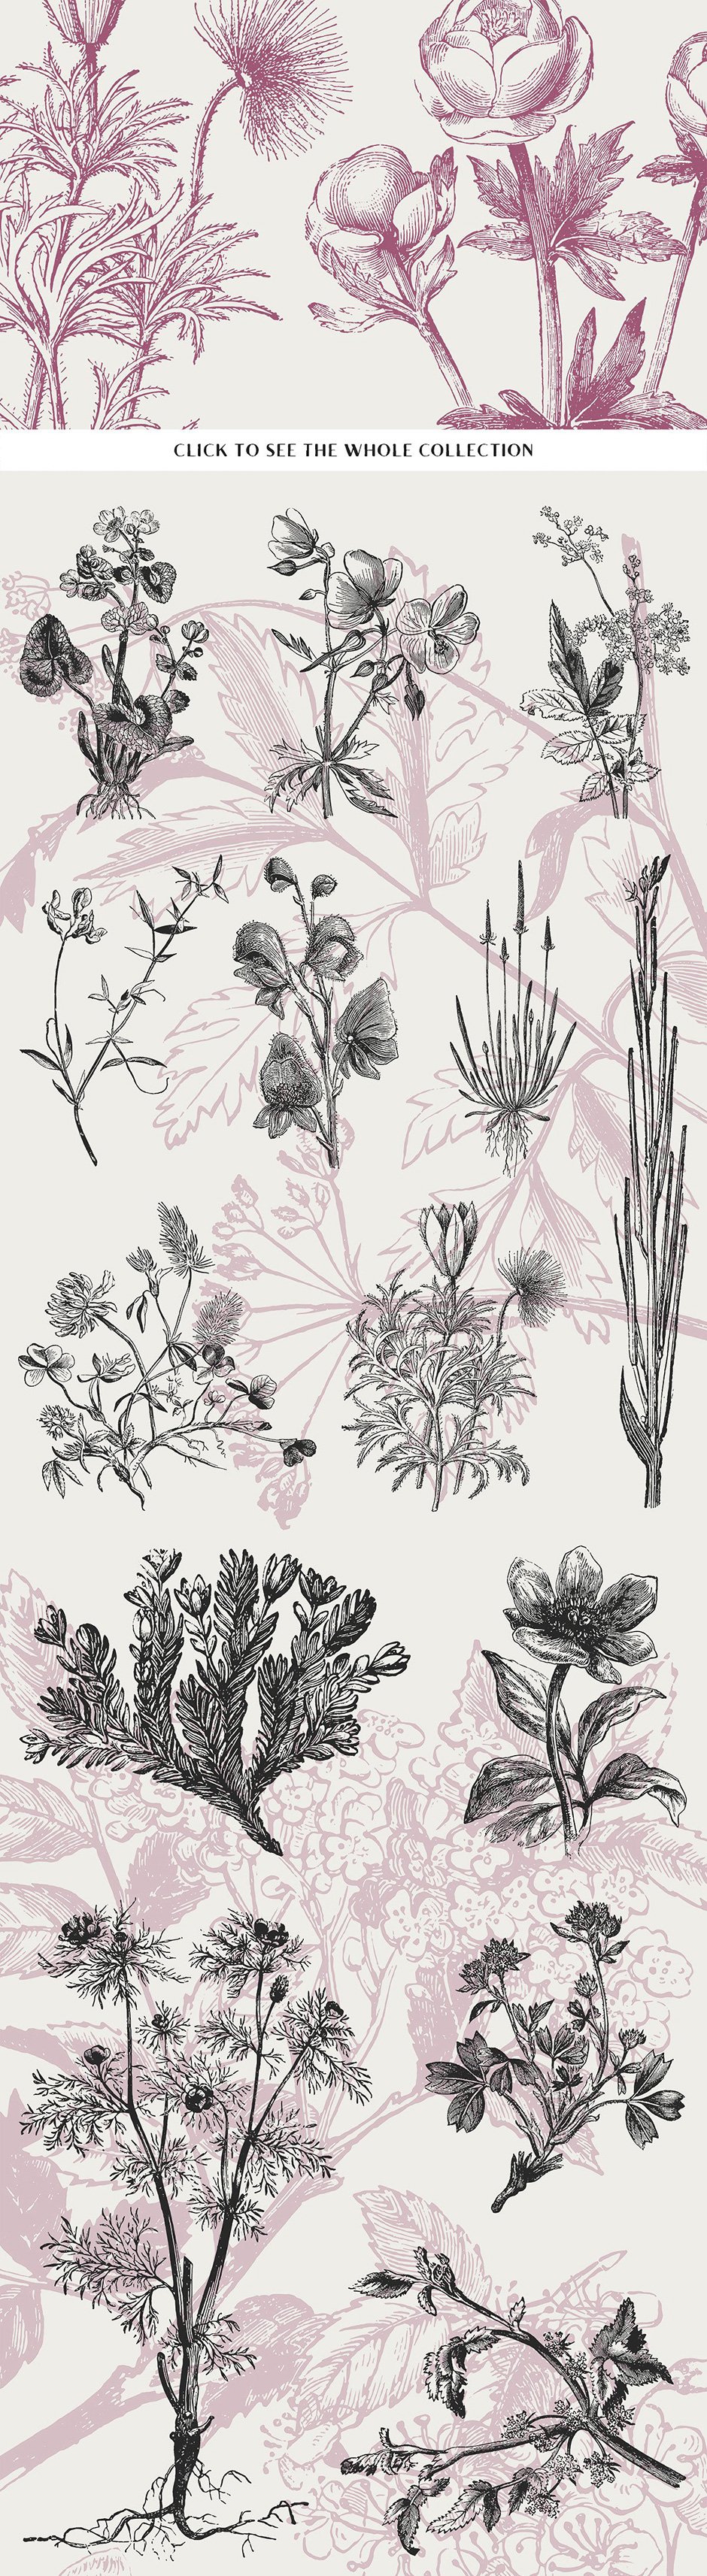 40 Plant & Flower Illustrations No. 4